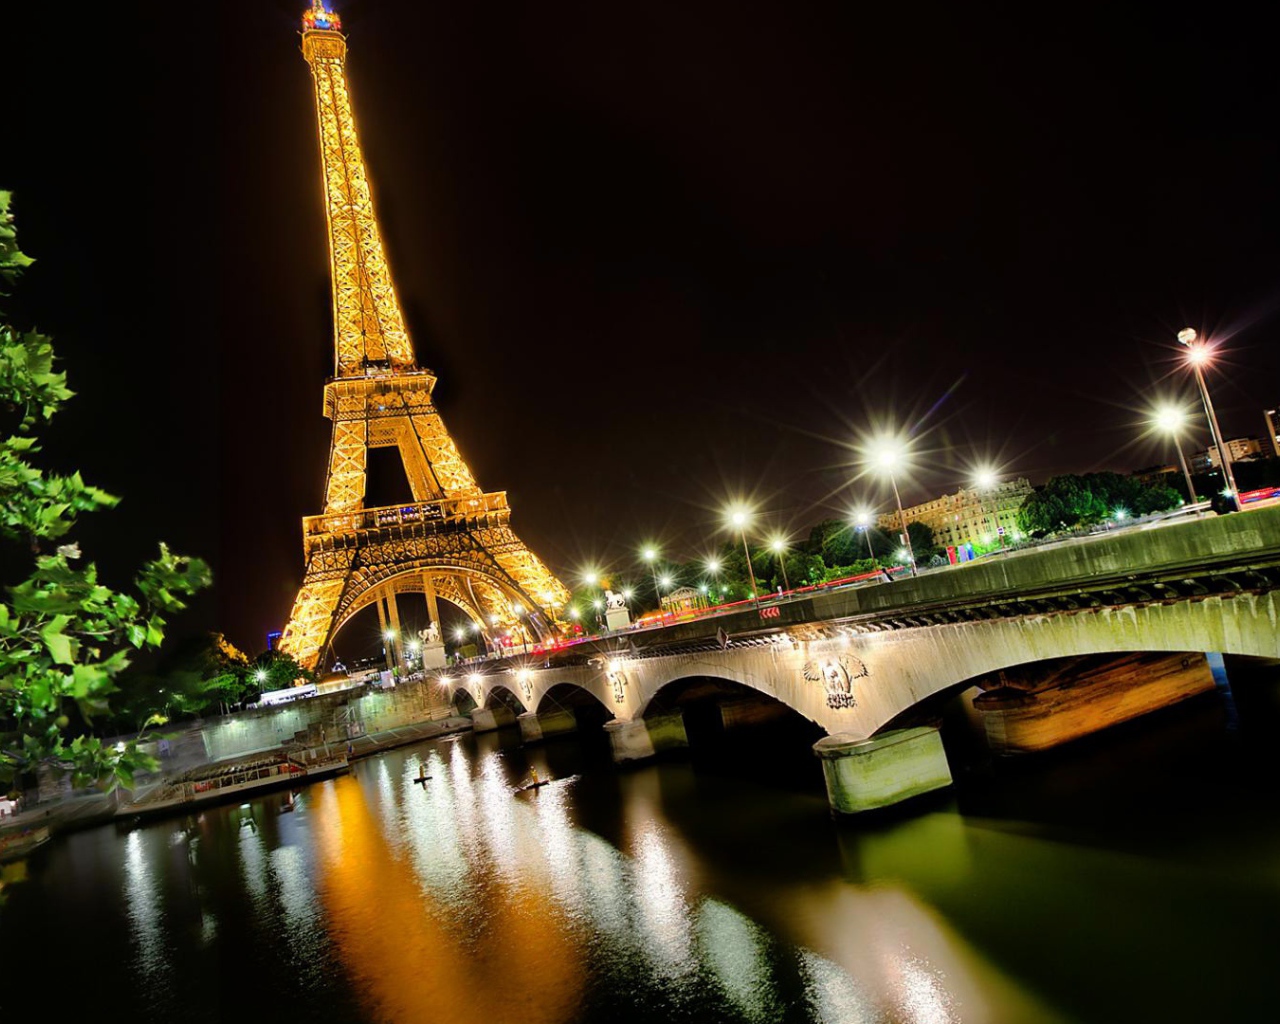 Beautiful night photo of the Eiffel Tower